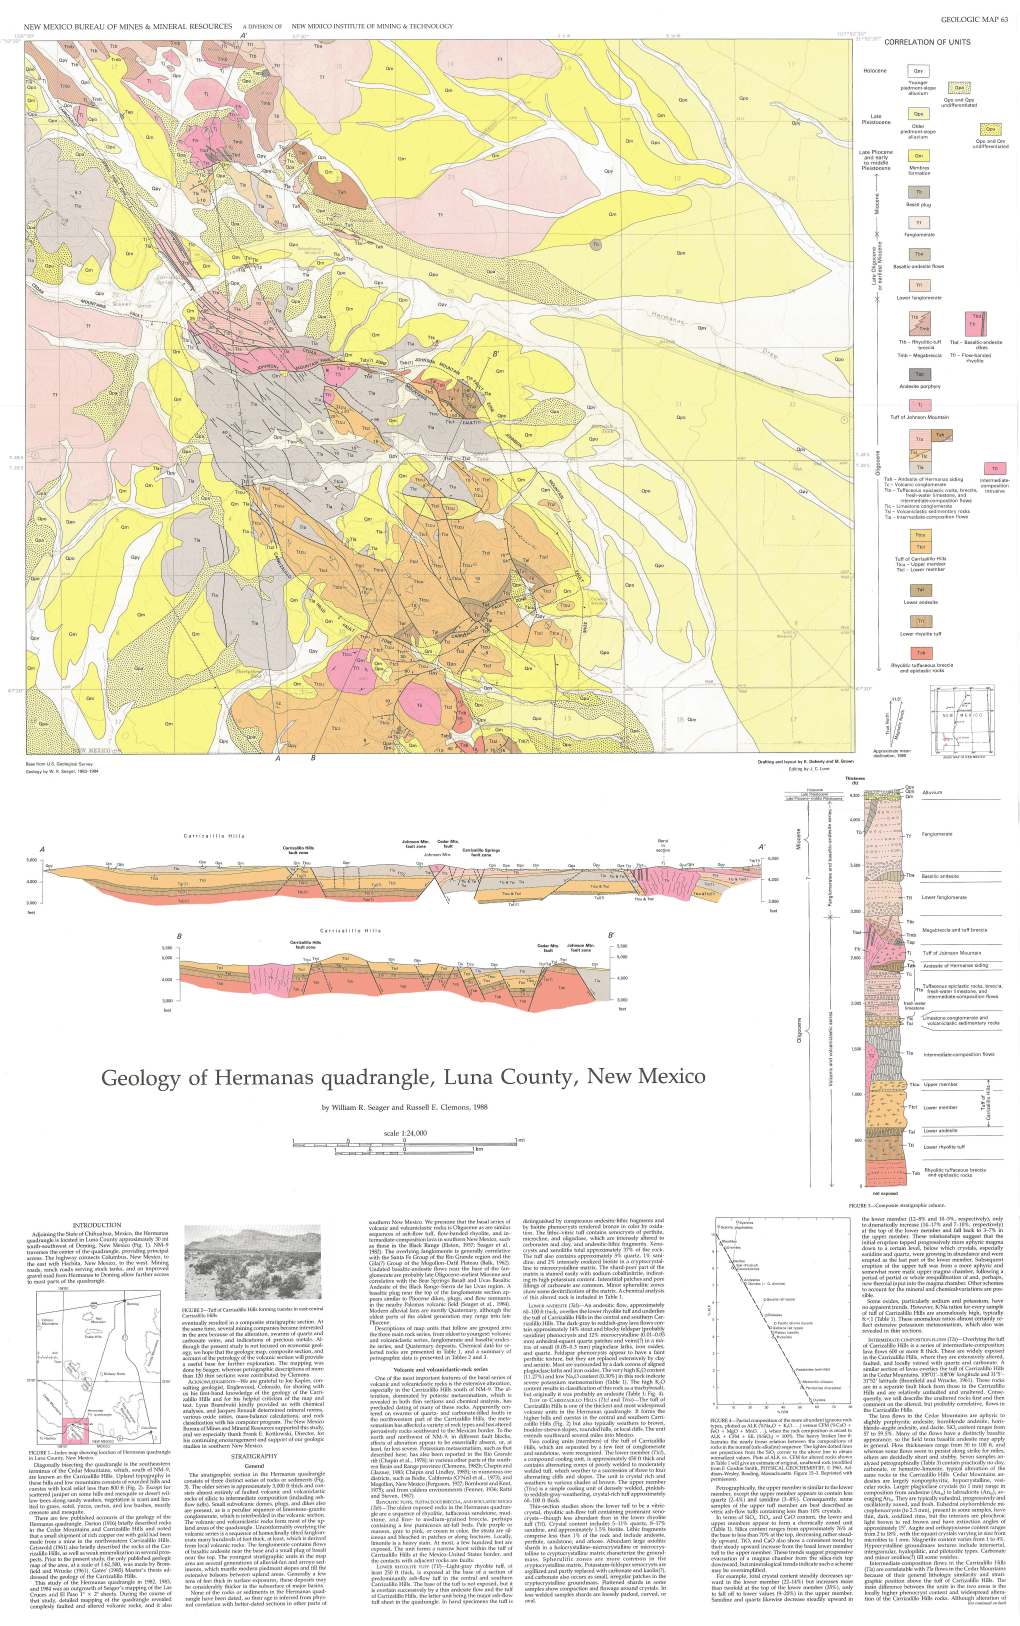 Geology of Hermanas Quadrangle, Luna County, New Mexico > Upper Member